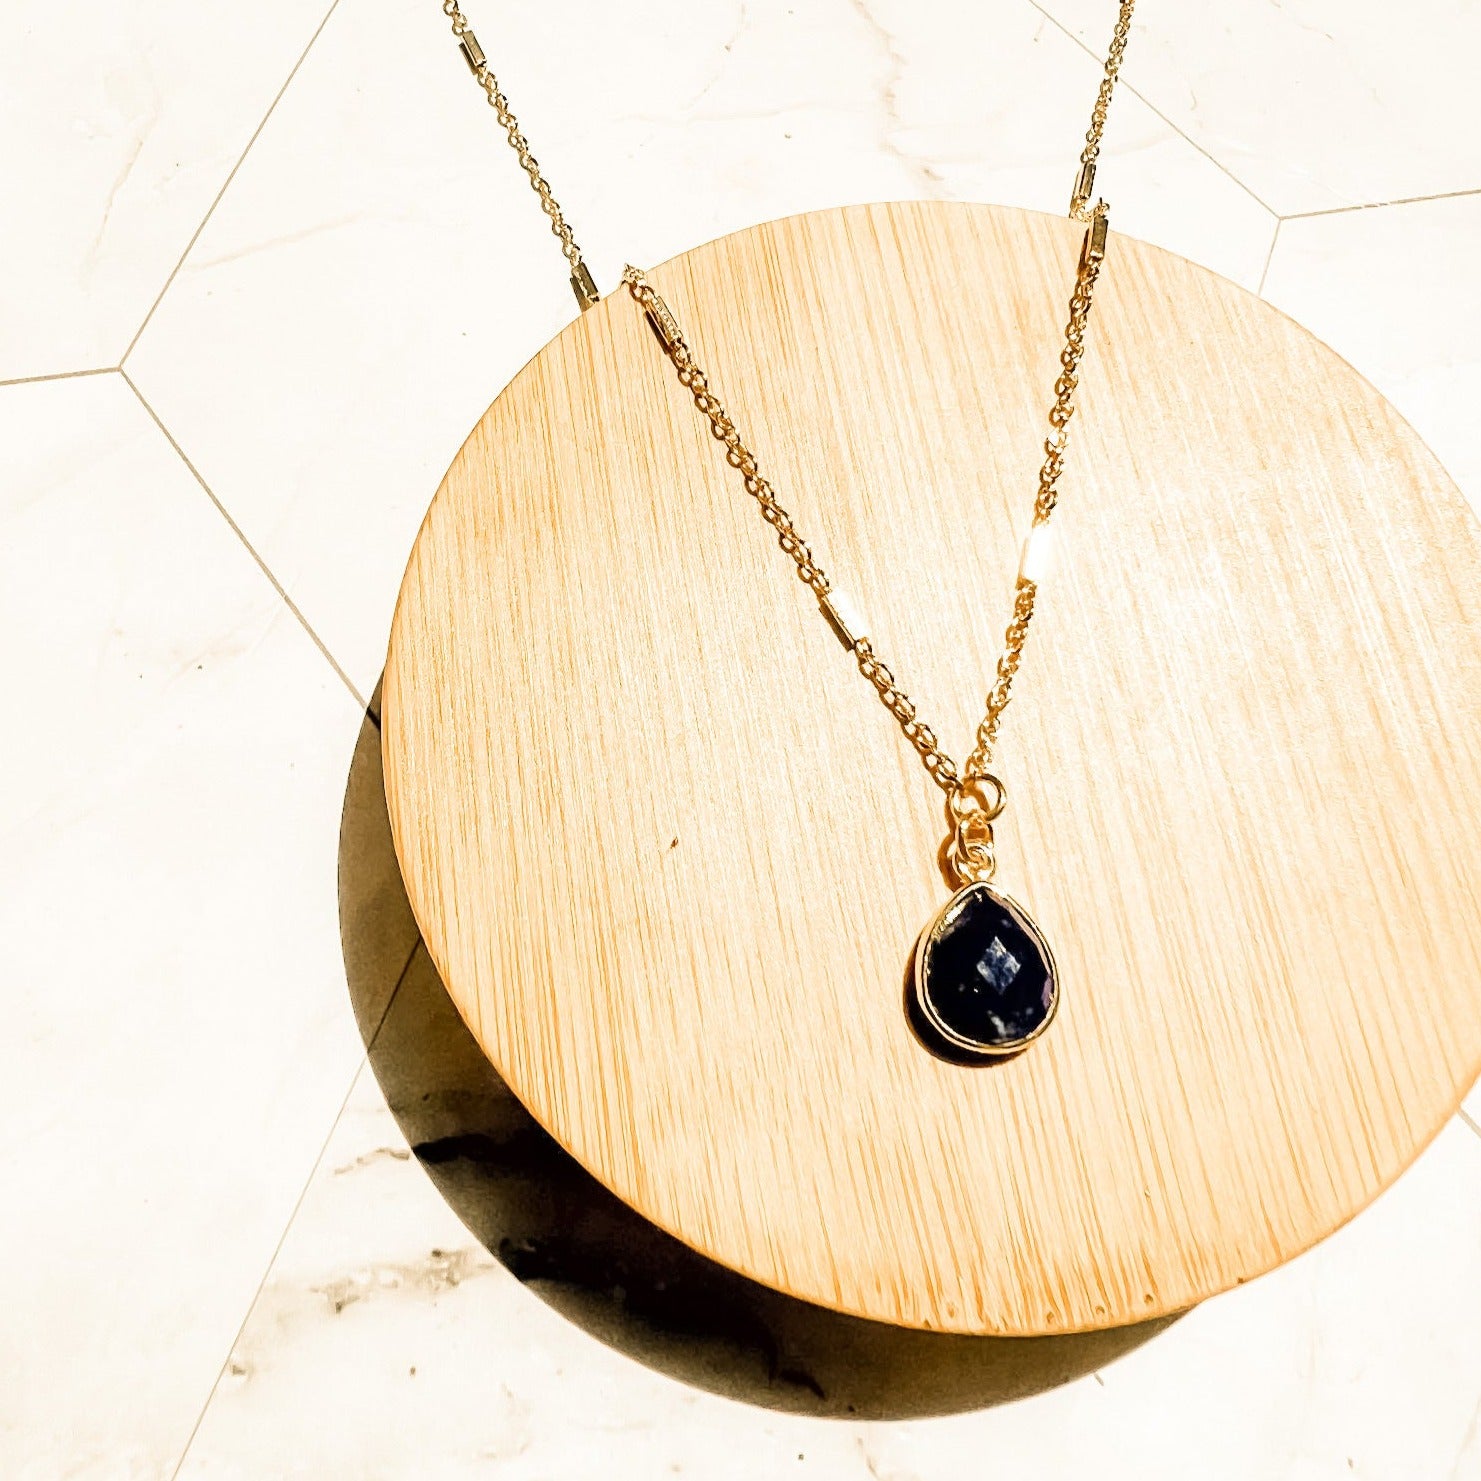 Gemstone Drop Necklace - Lapis, Pyrite, or Black Druzy